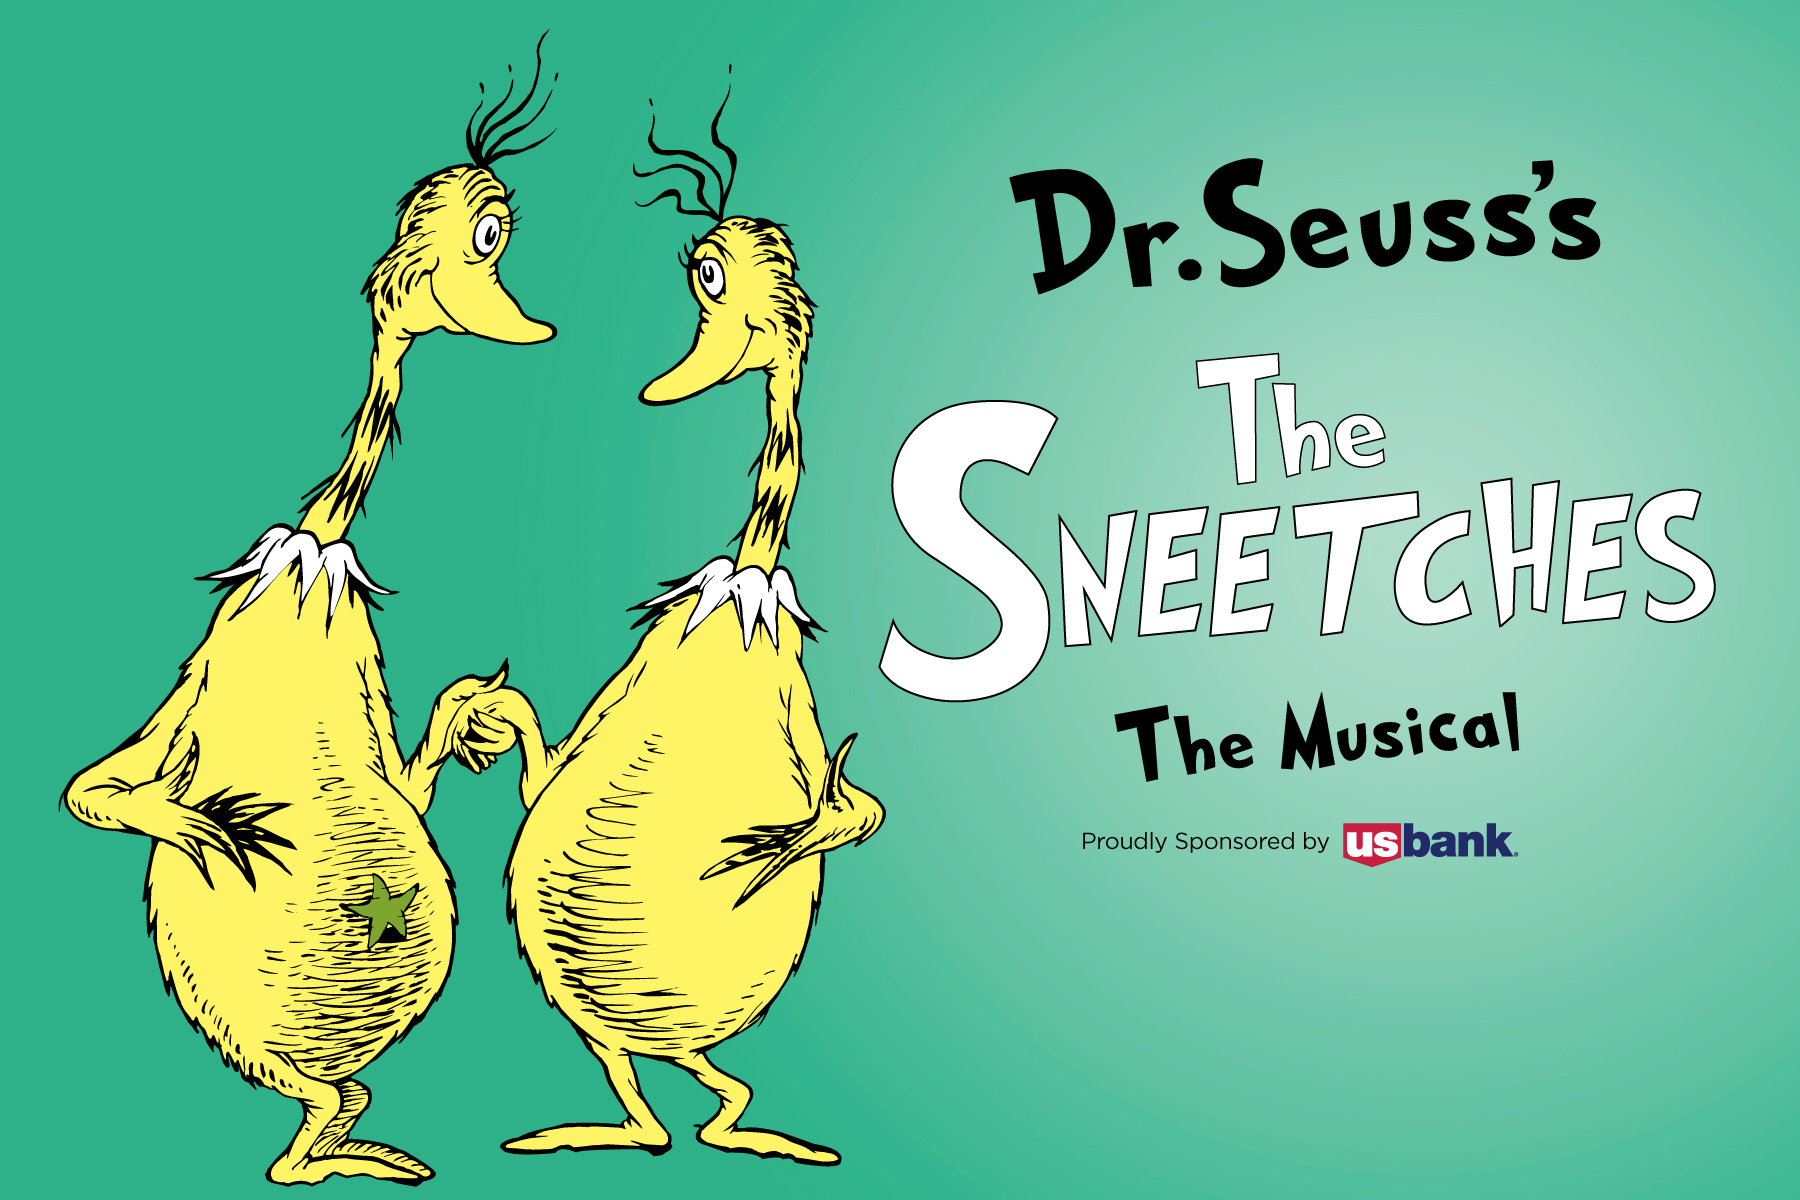 Dr. Seuss'sThe Sneetches The Musical | MinnesotaPlaylist.com